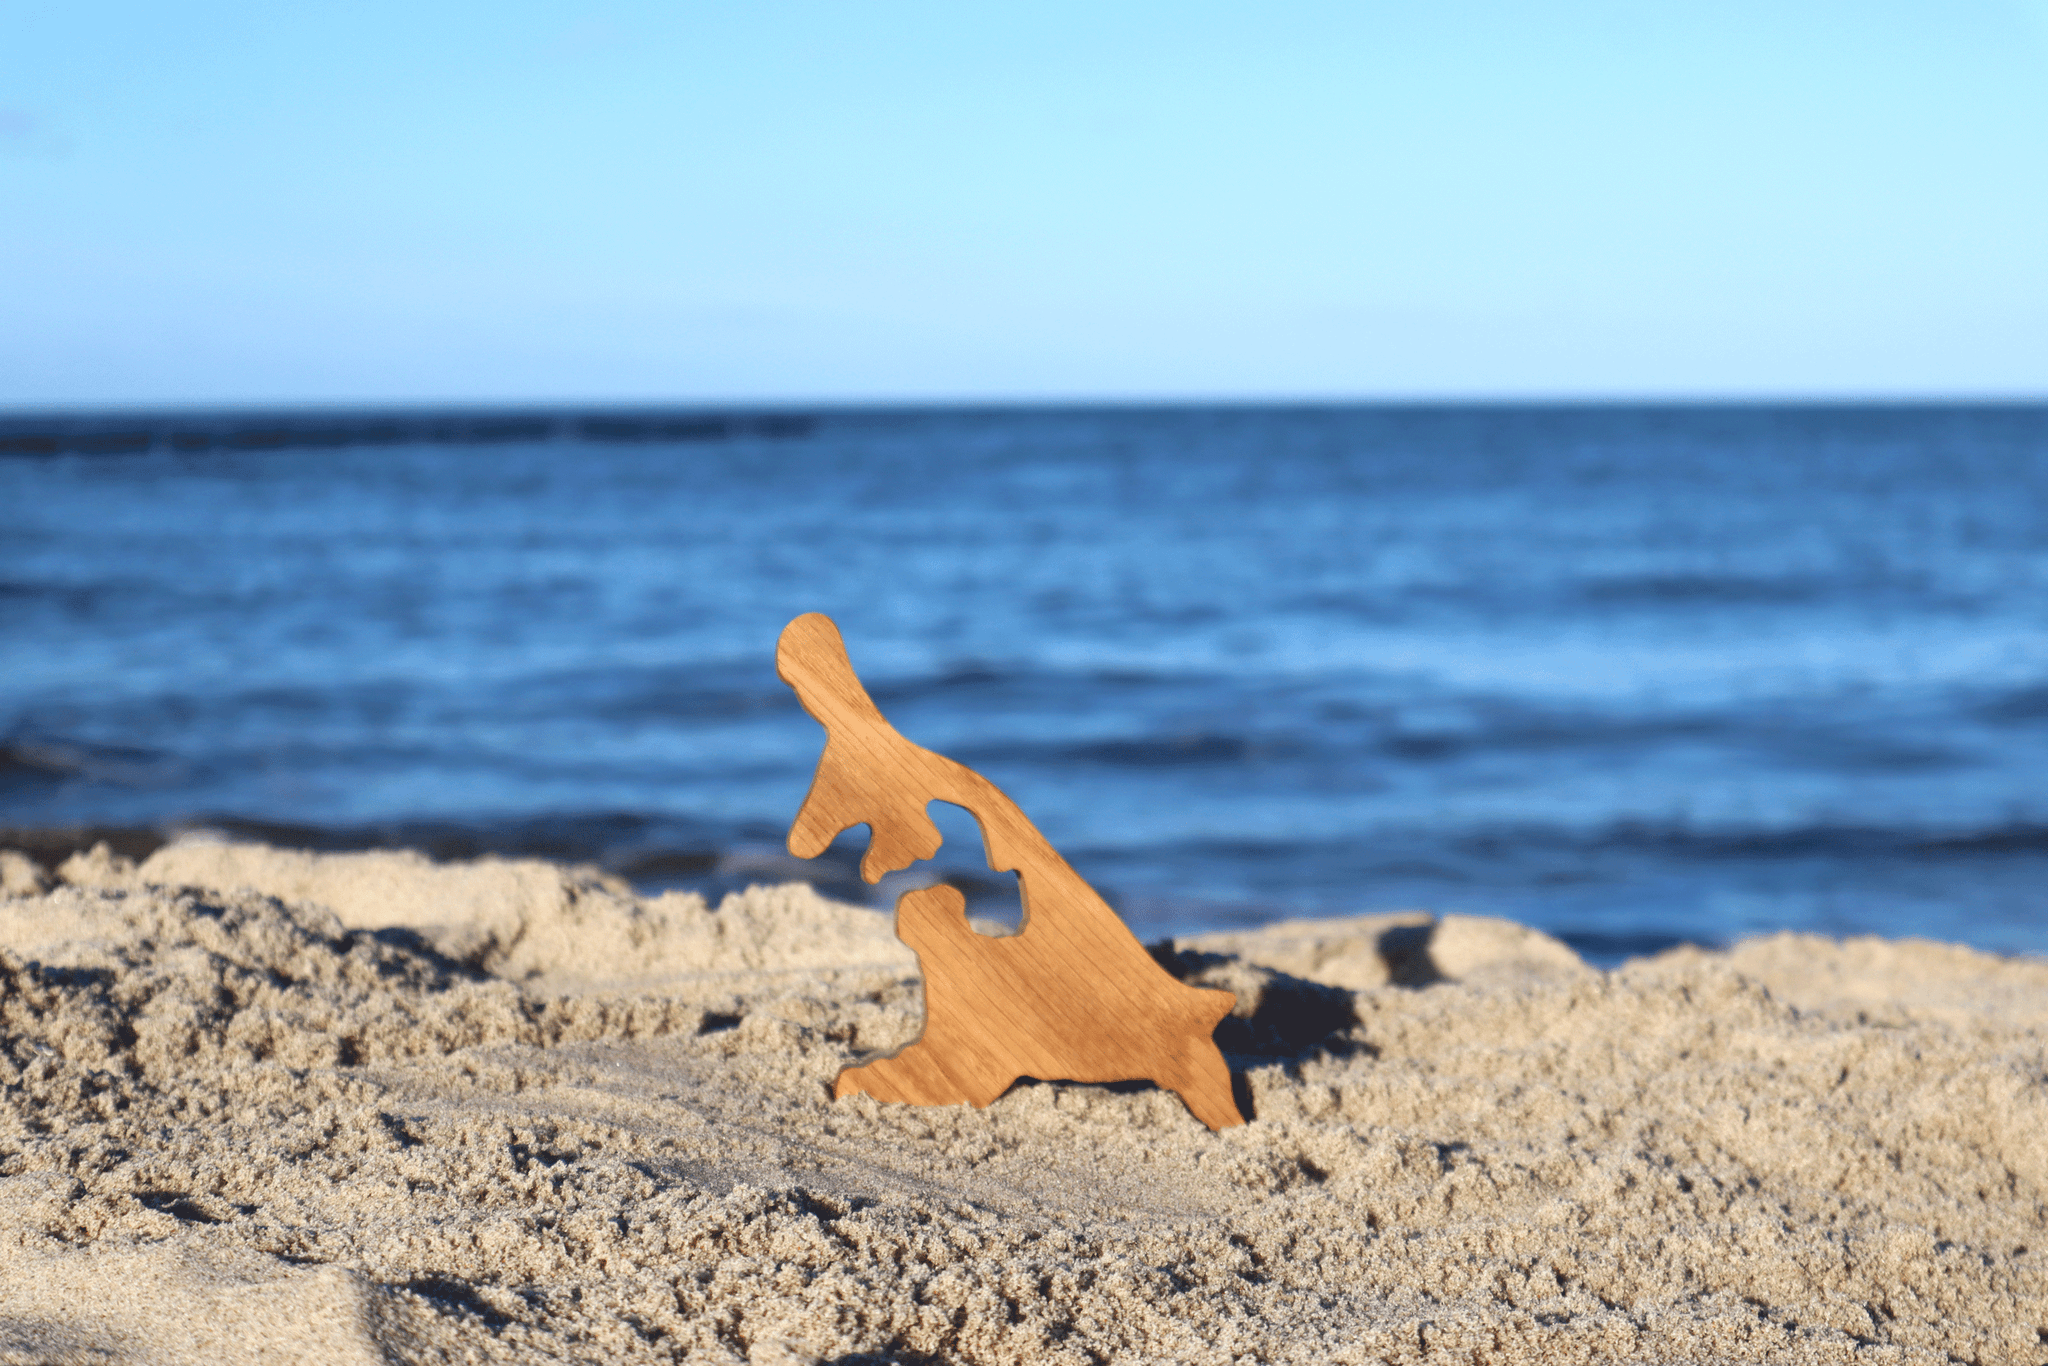 Holz-Miniatur der Insel Usedom am Strand